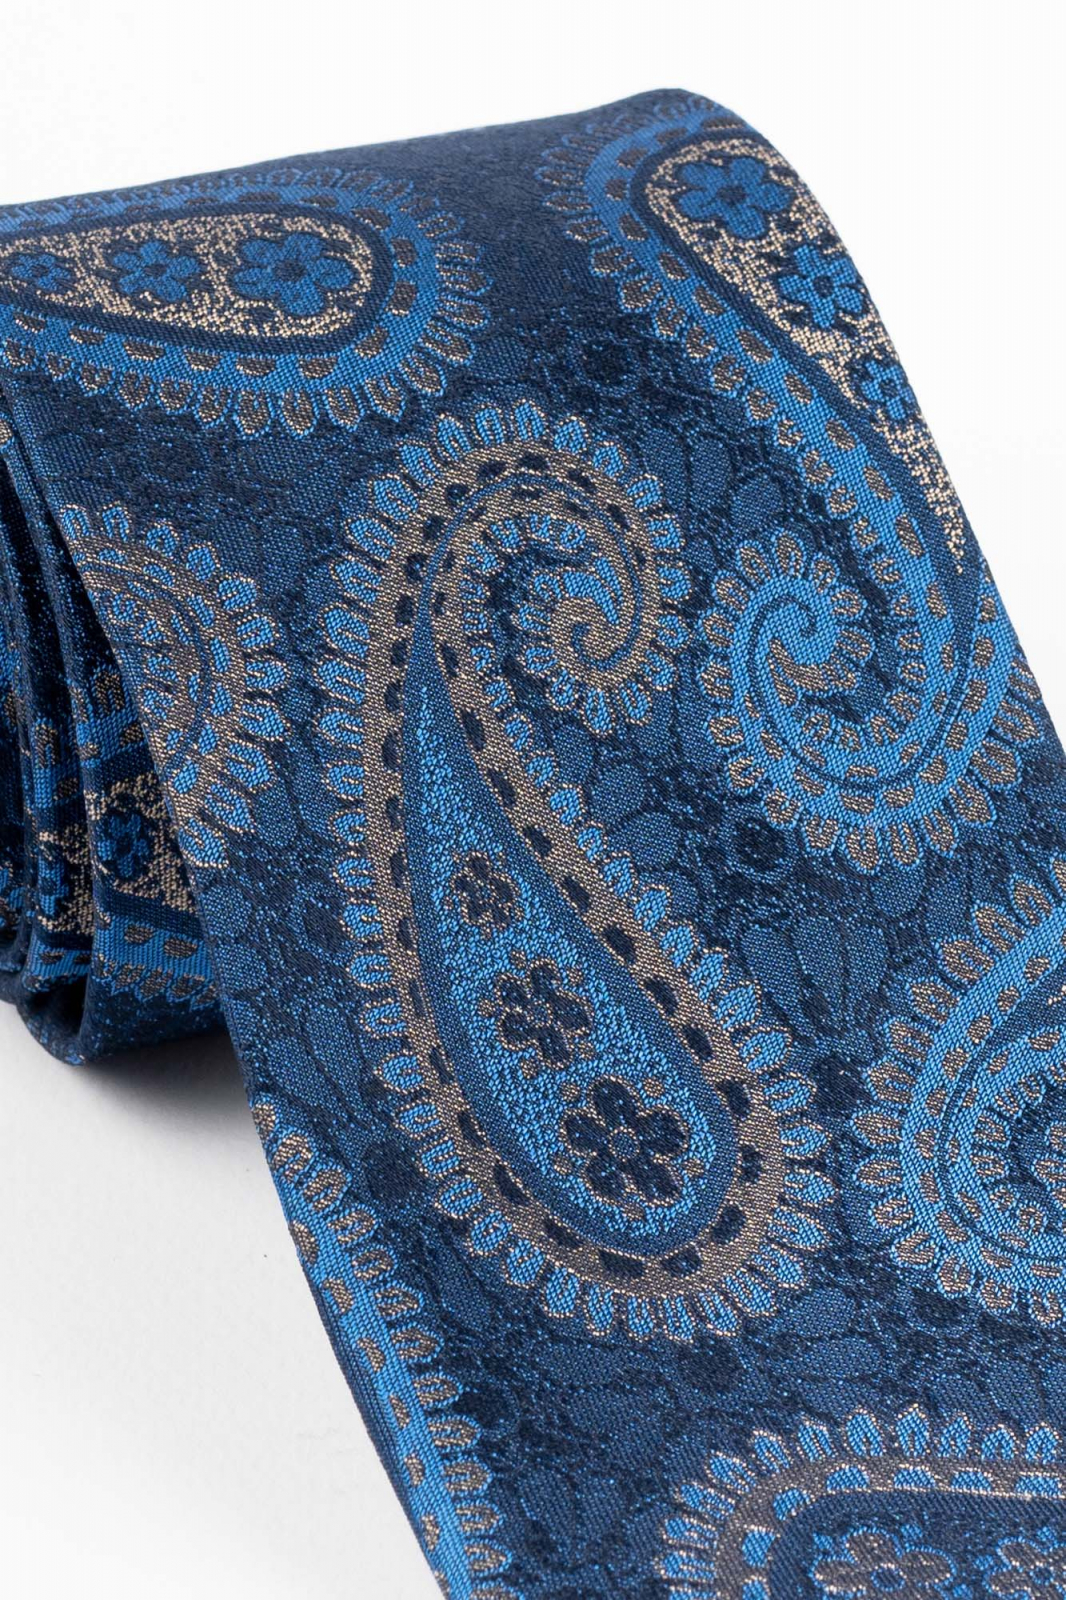 I was surprised Indefinite mercy Cravata din matase naturala bleumarin cu model paisley albastru si gri